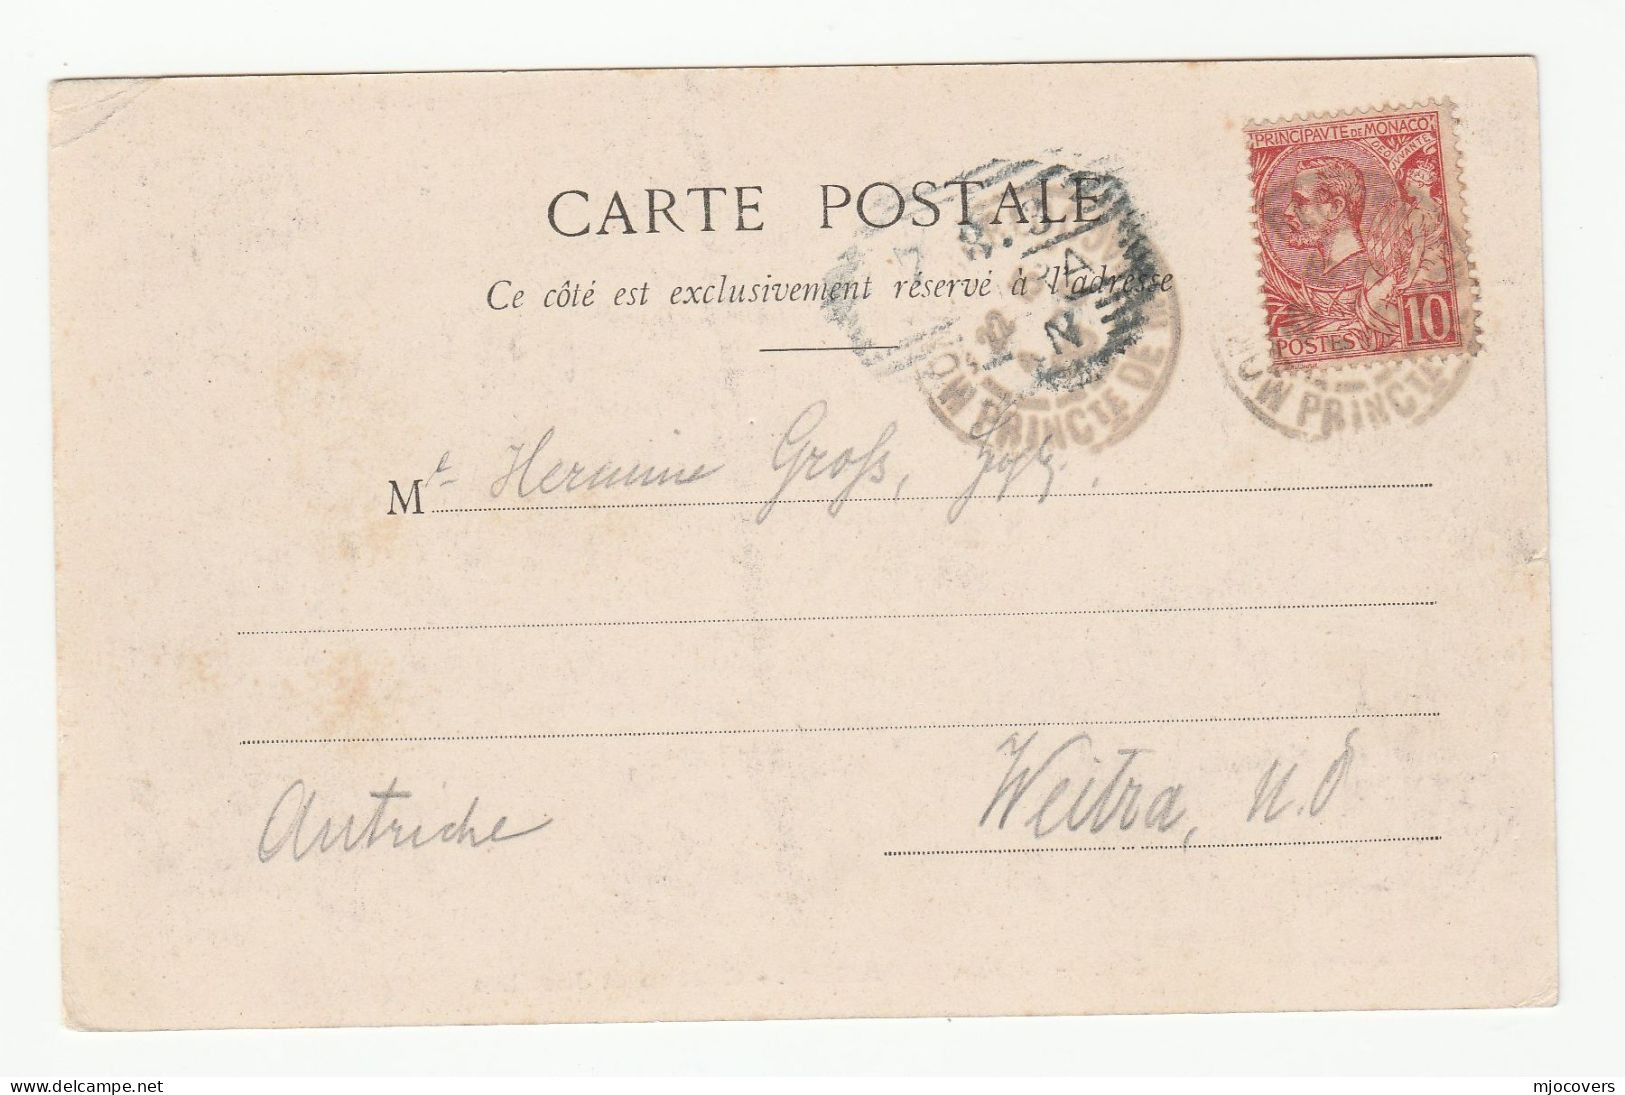 1903 MONACO Postcard Casino Et Jardins, Covers Stamps - Cartas & Documentos